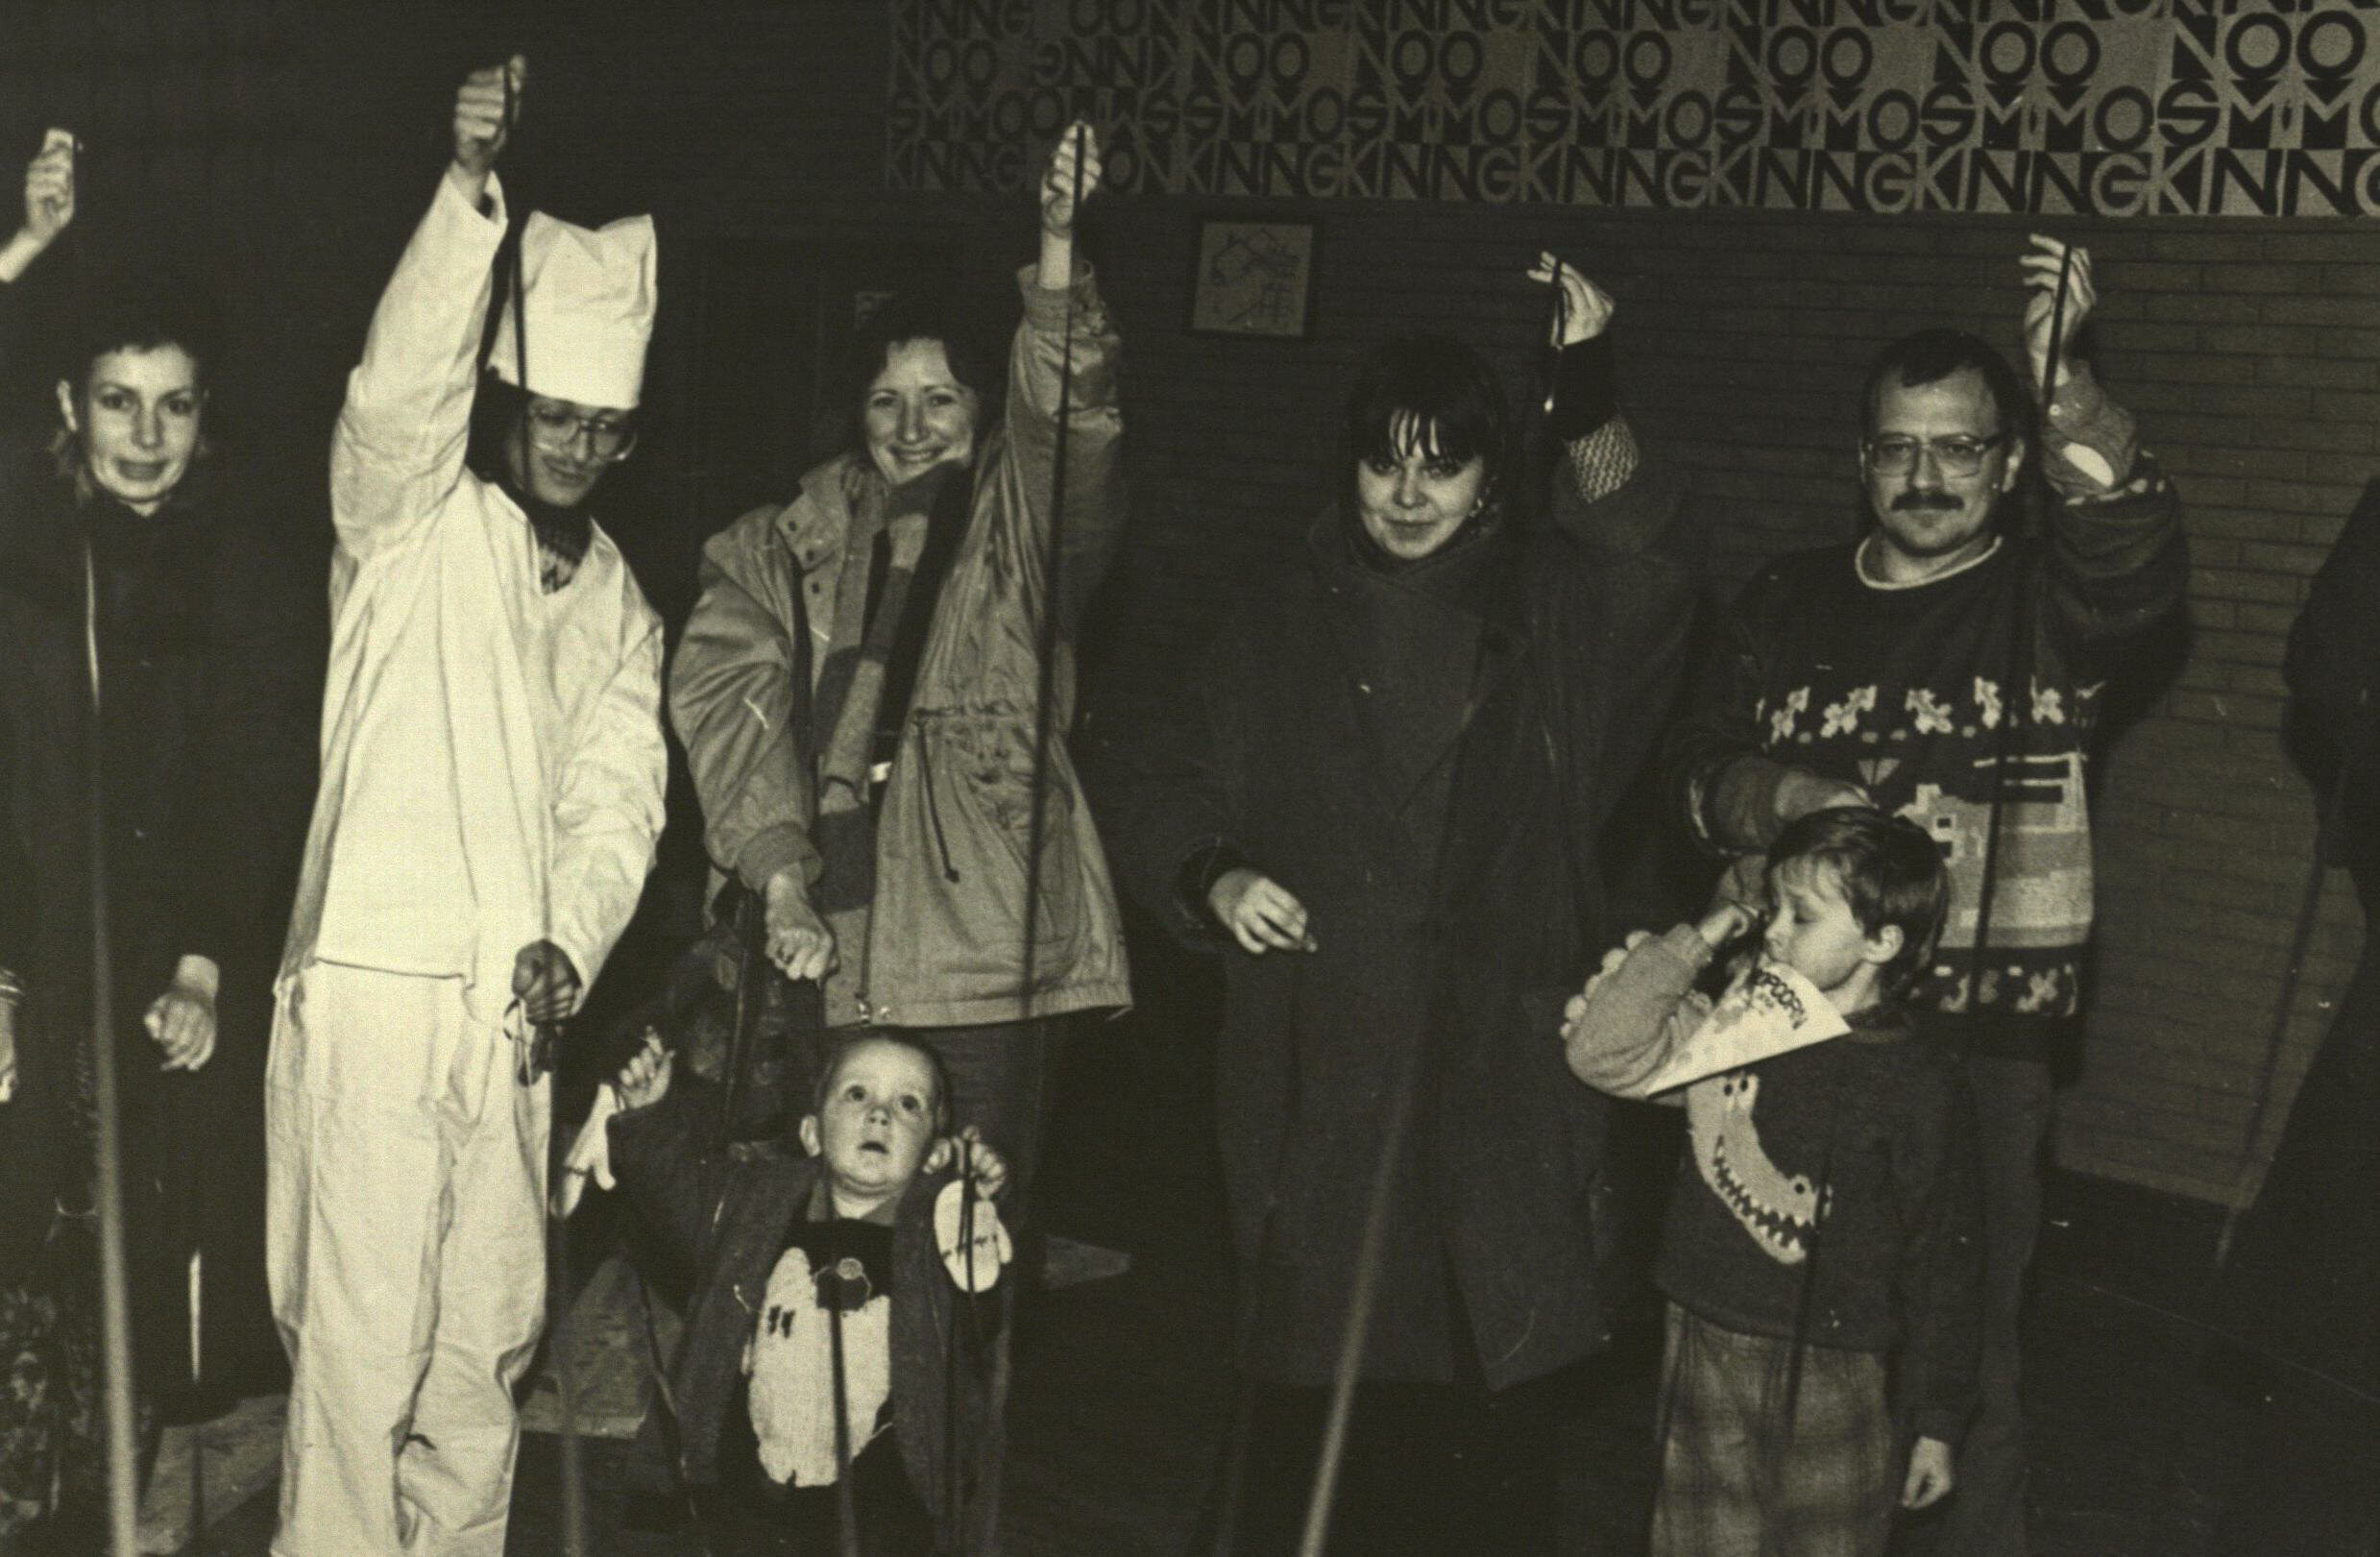 1992 fluxus paroda Moksleiviu rumuose Vilniuje uzdarymo akcija.jpg